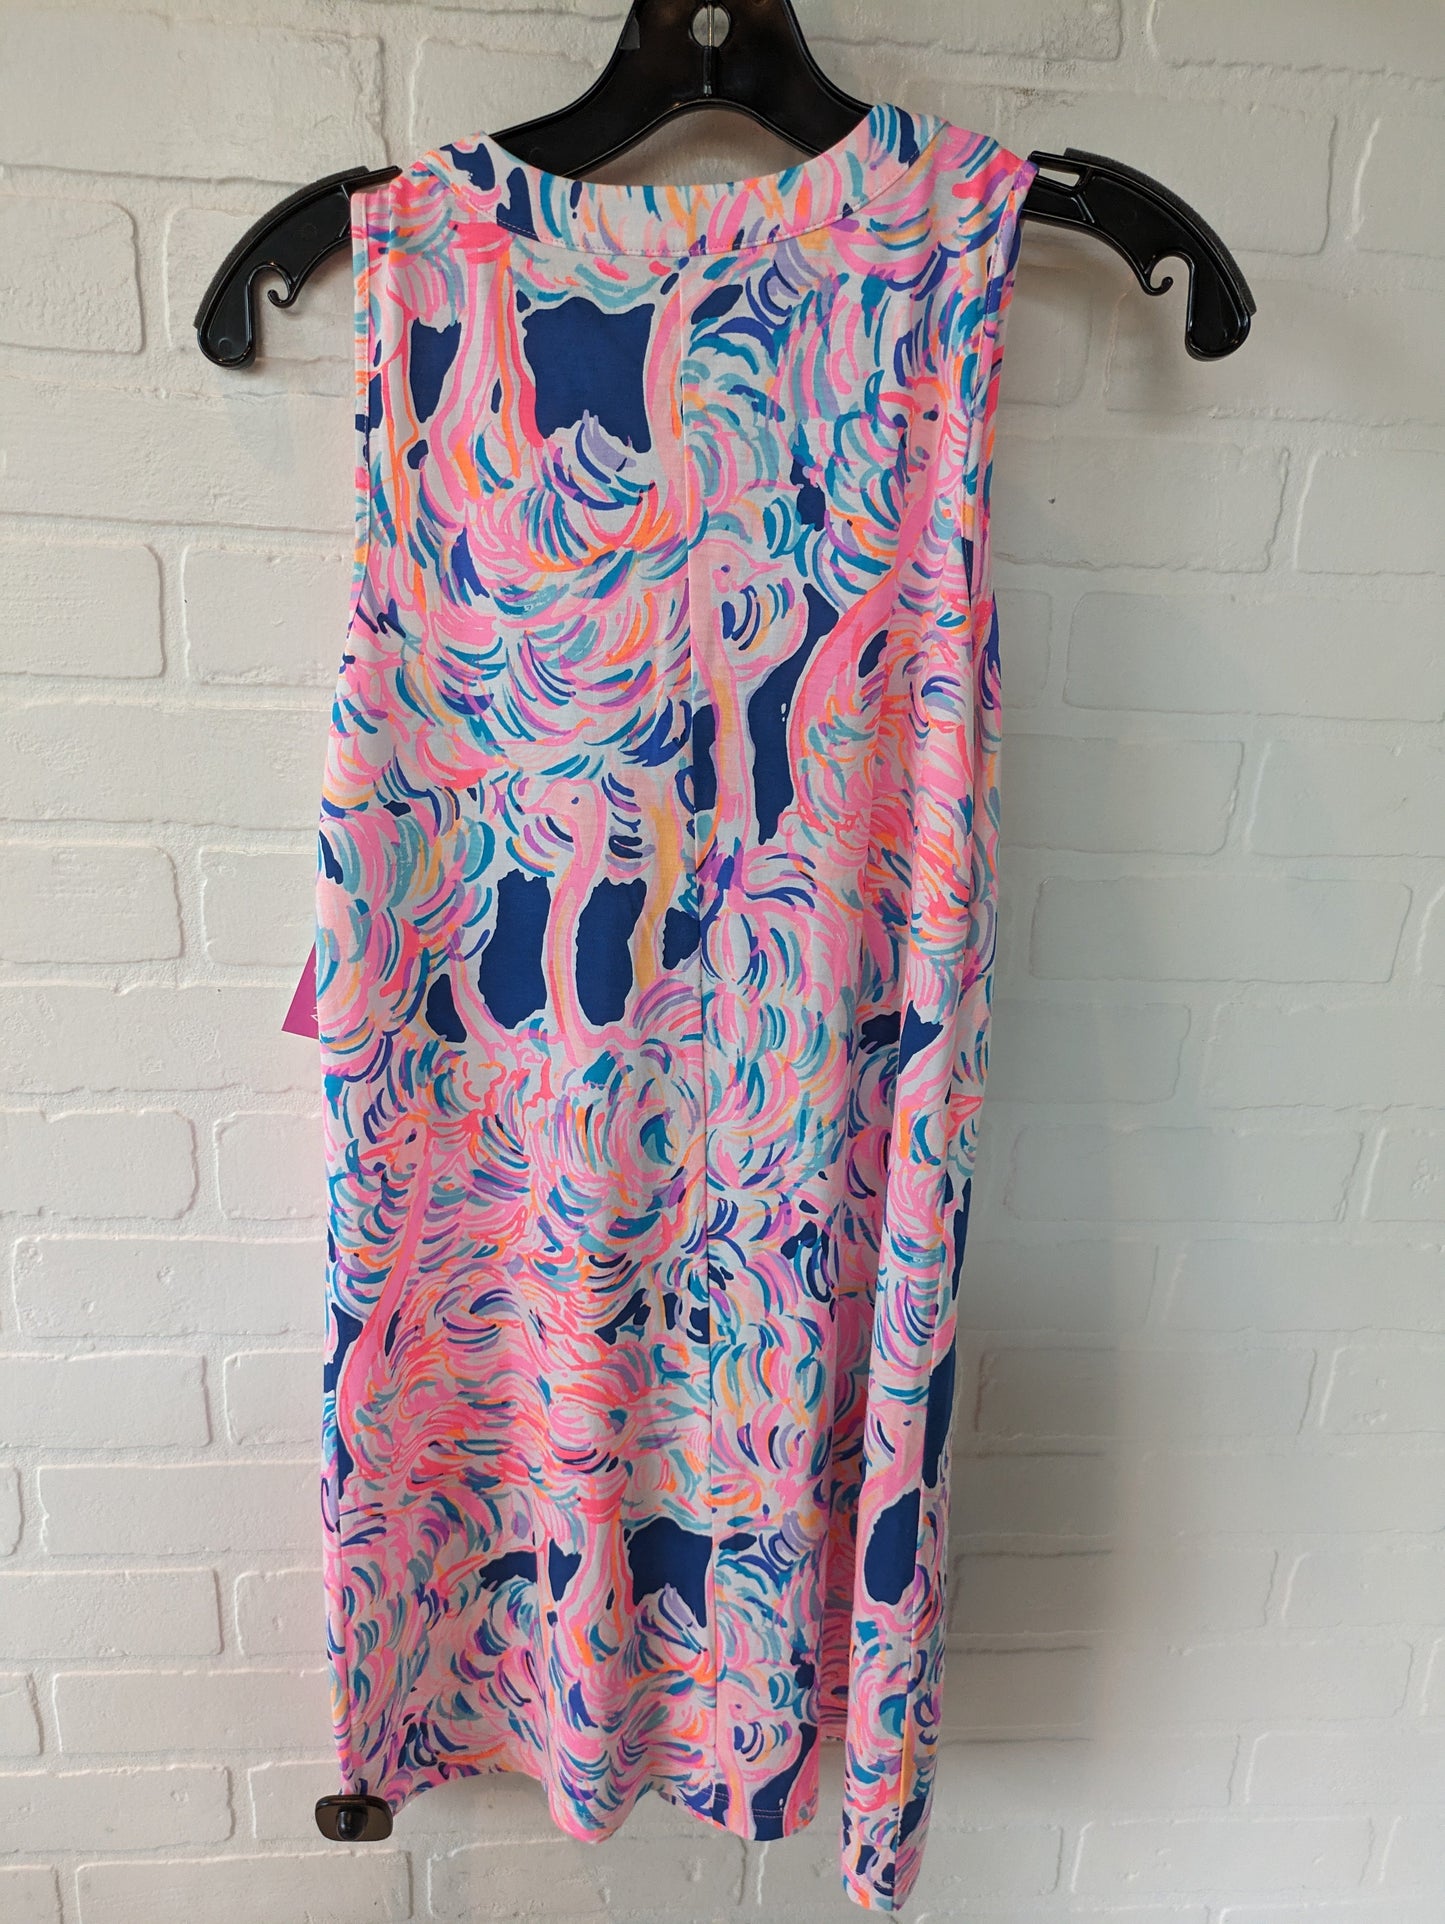 Multi-colored Dress Designer Lilly Pulitzer, Size Xxs